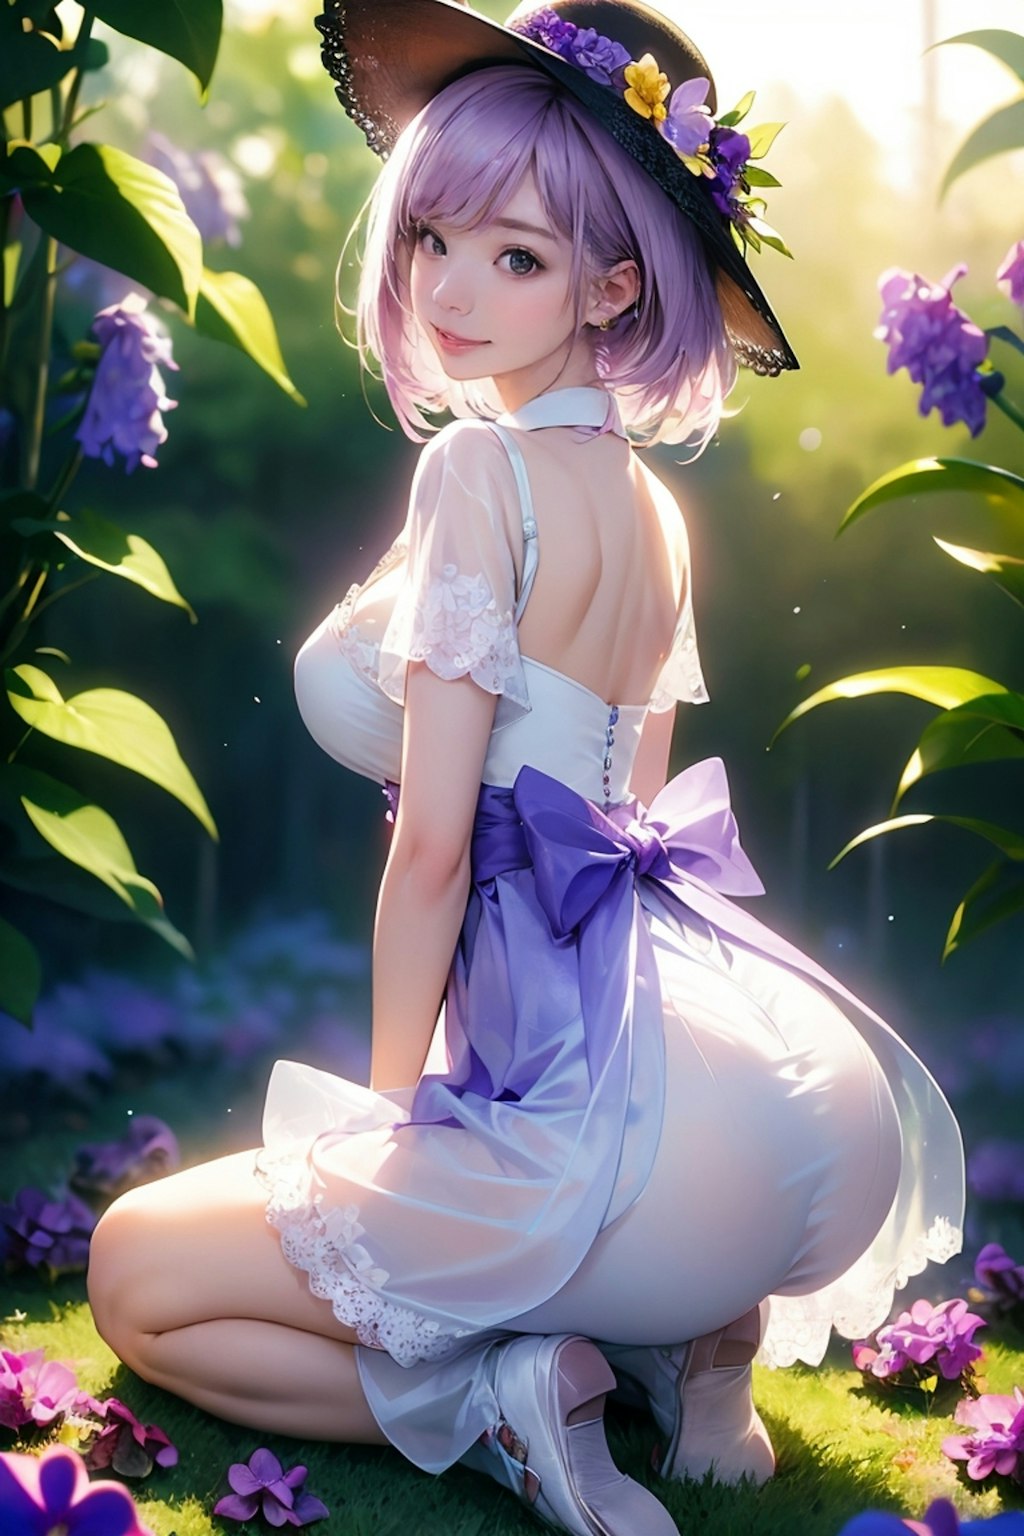 Violet flower Girl